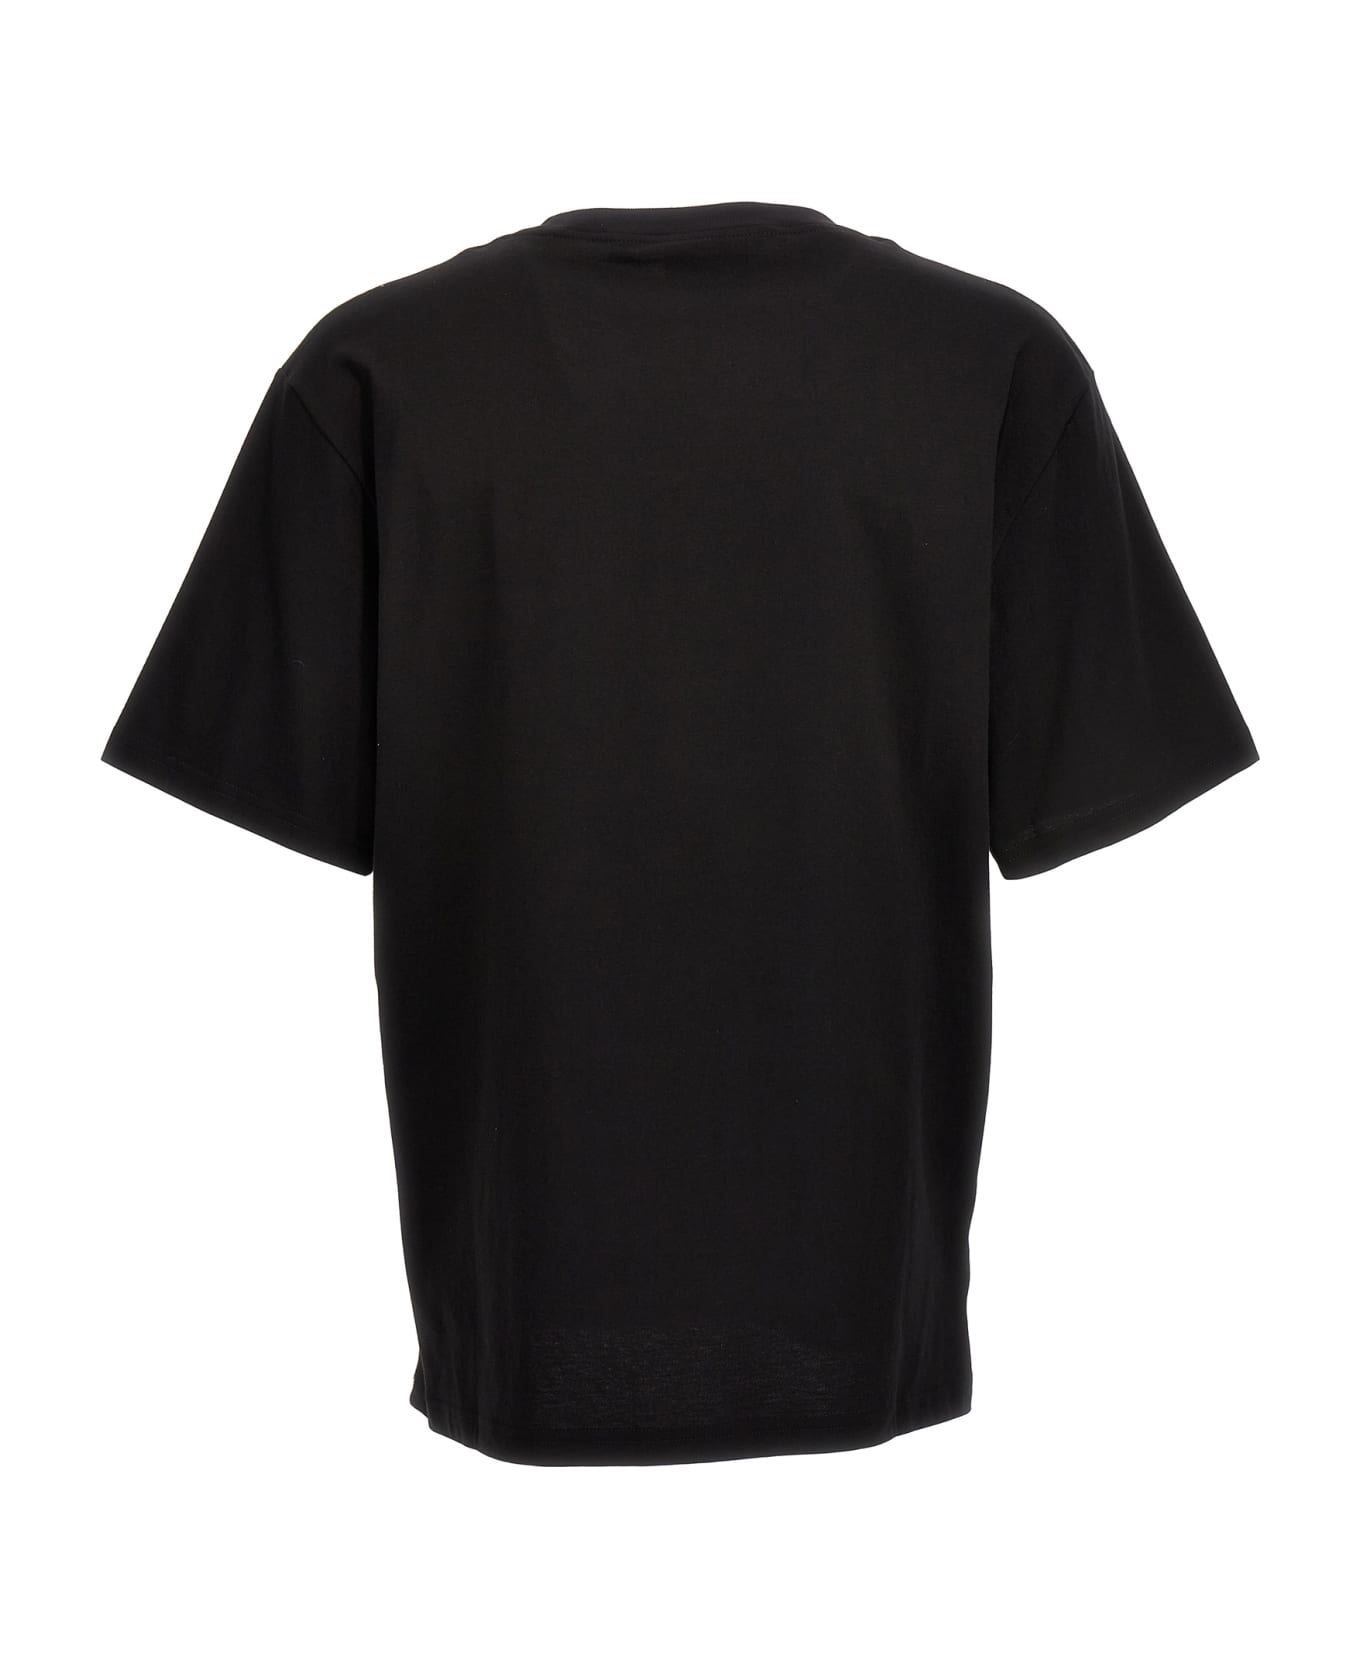 GCDS Embroidery T-shirt - Black  